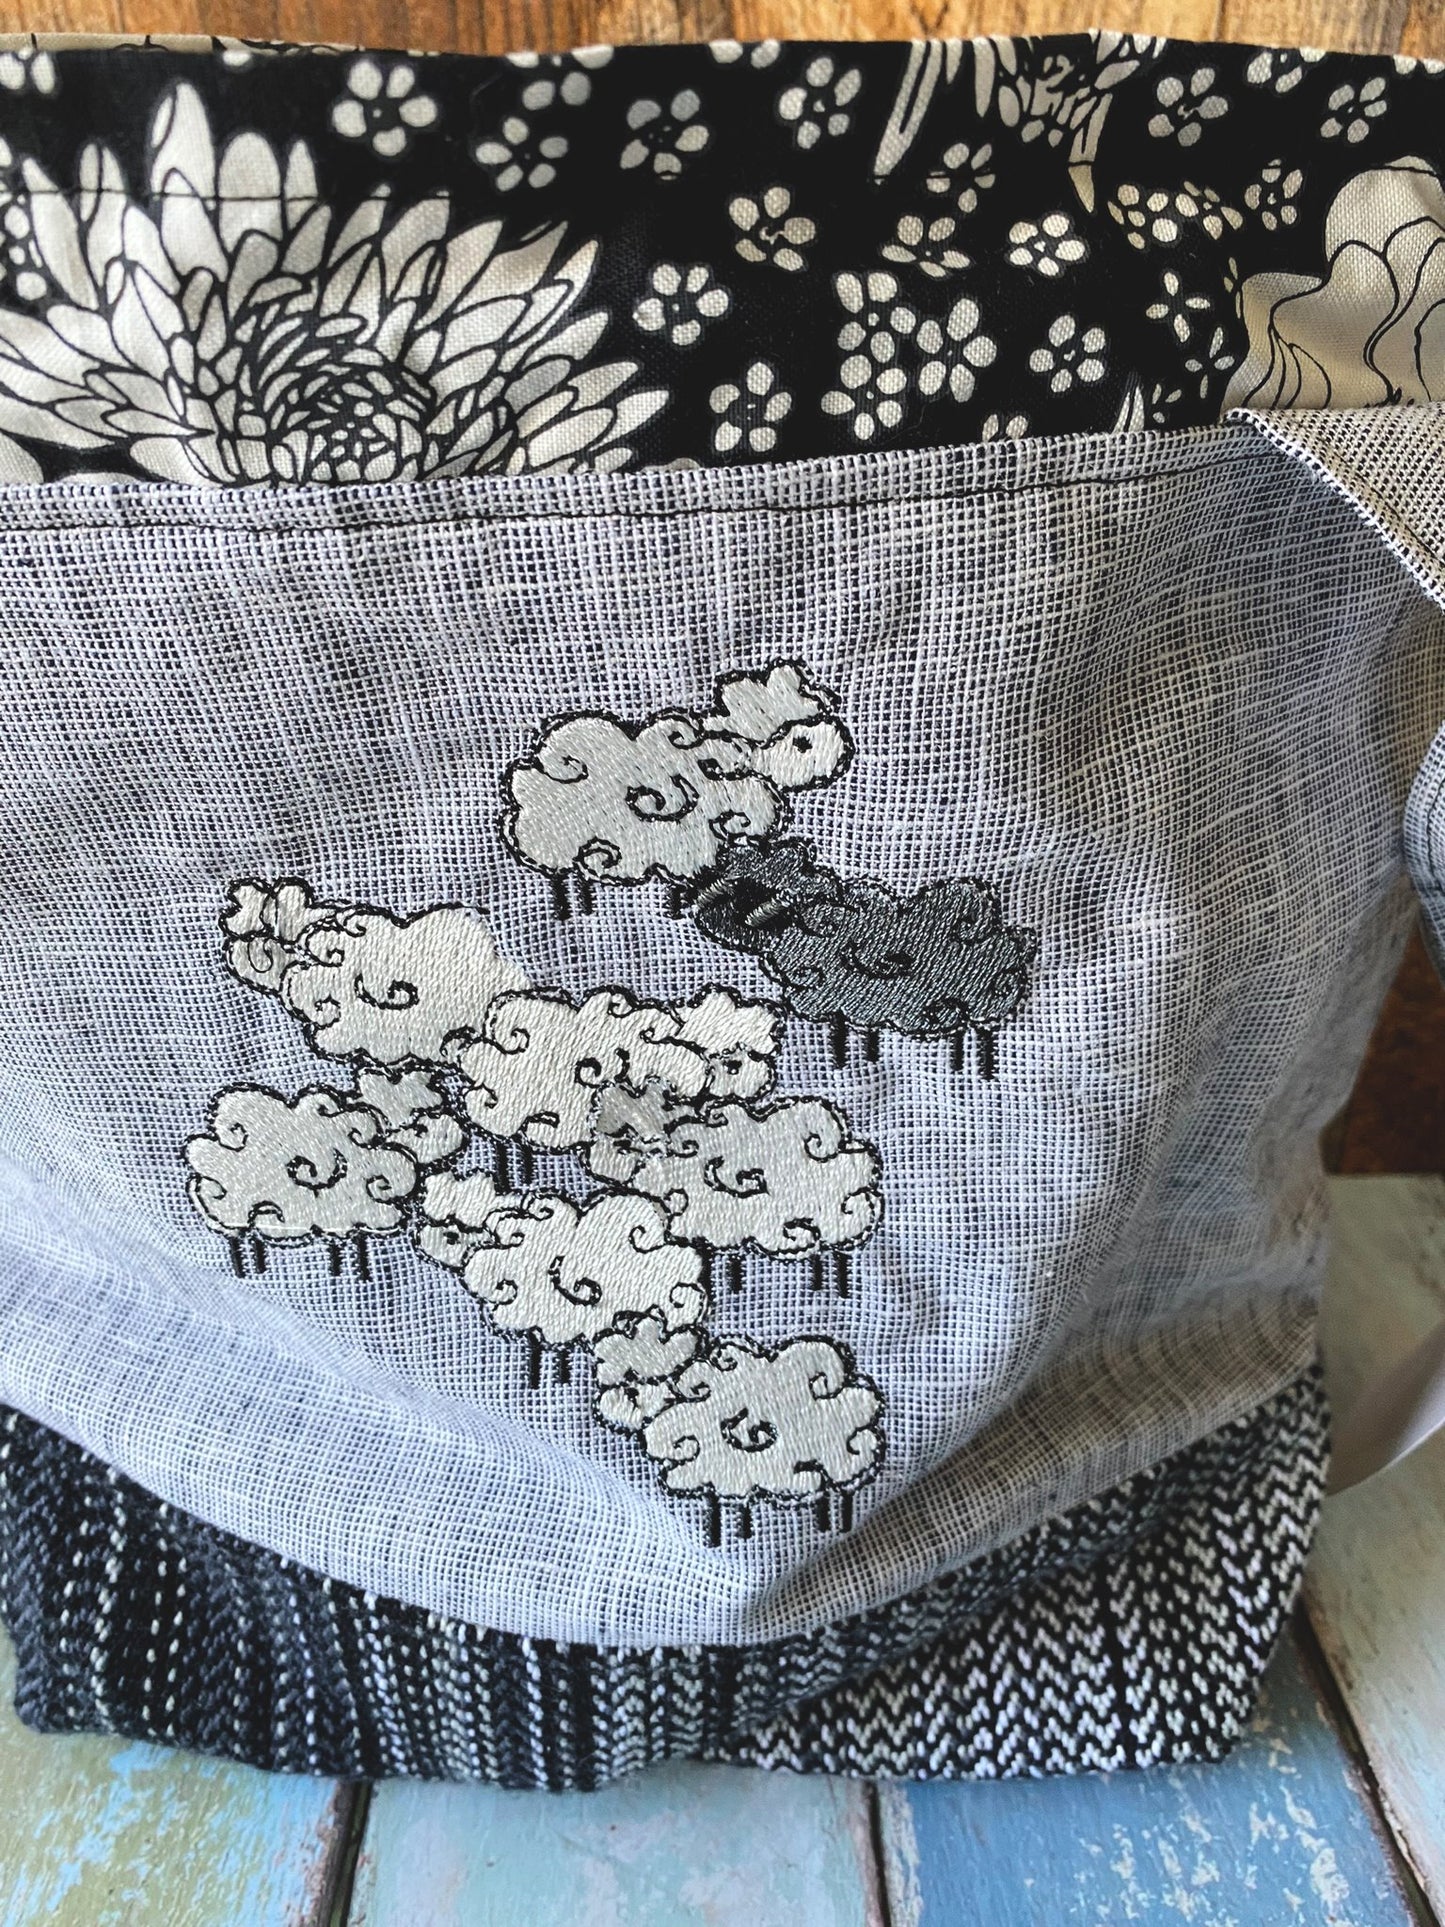 Knitting Takes Balls and Sheep Embroidery Medium Project Bag